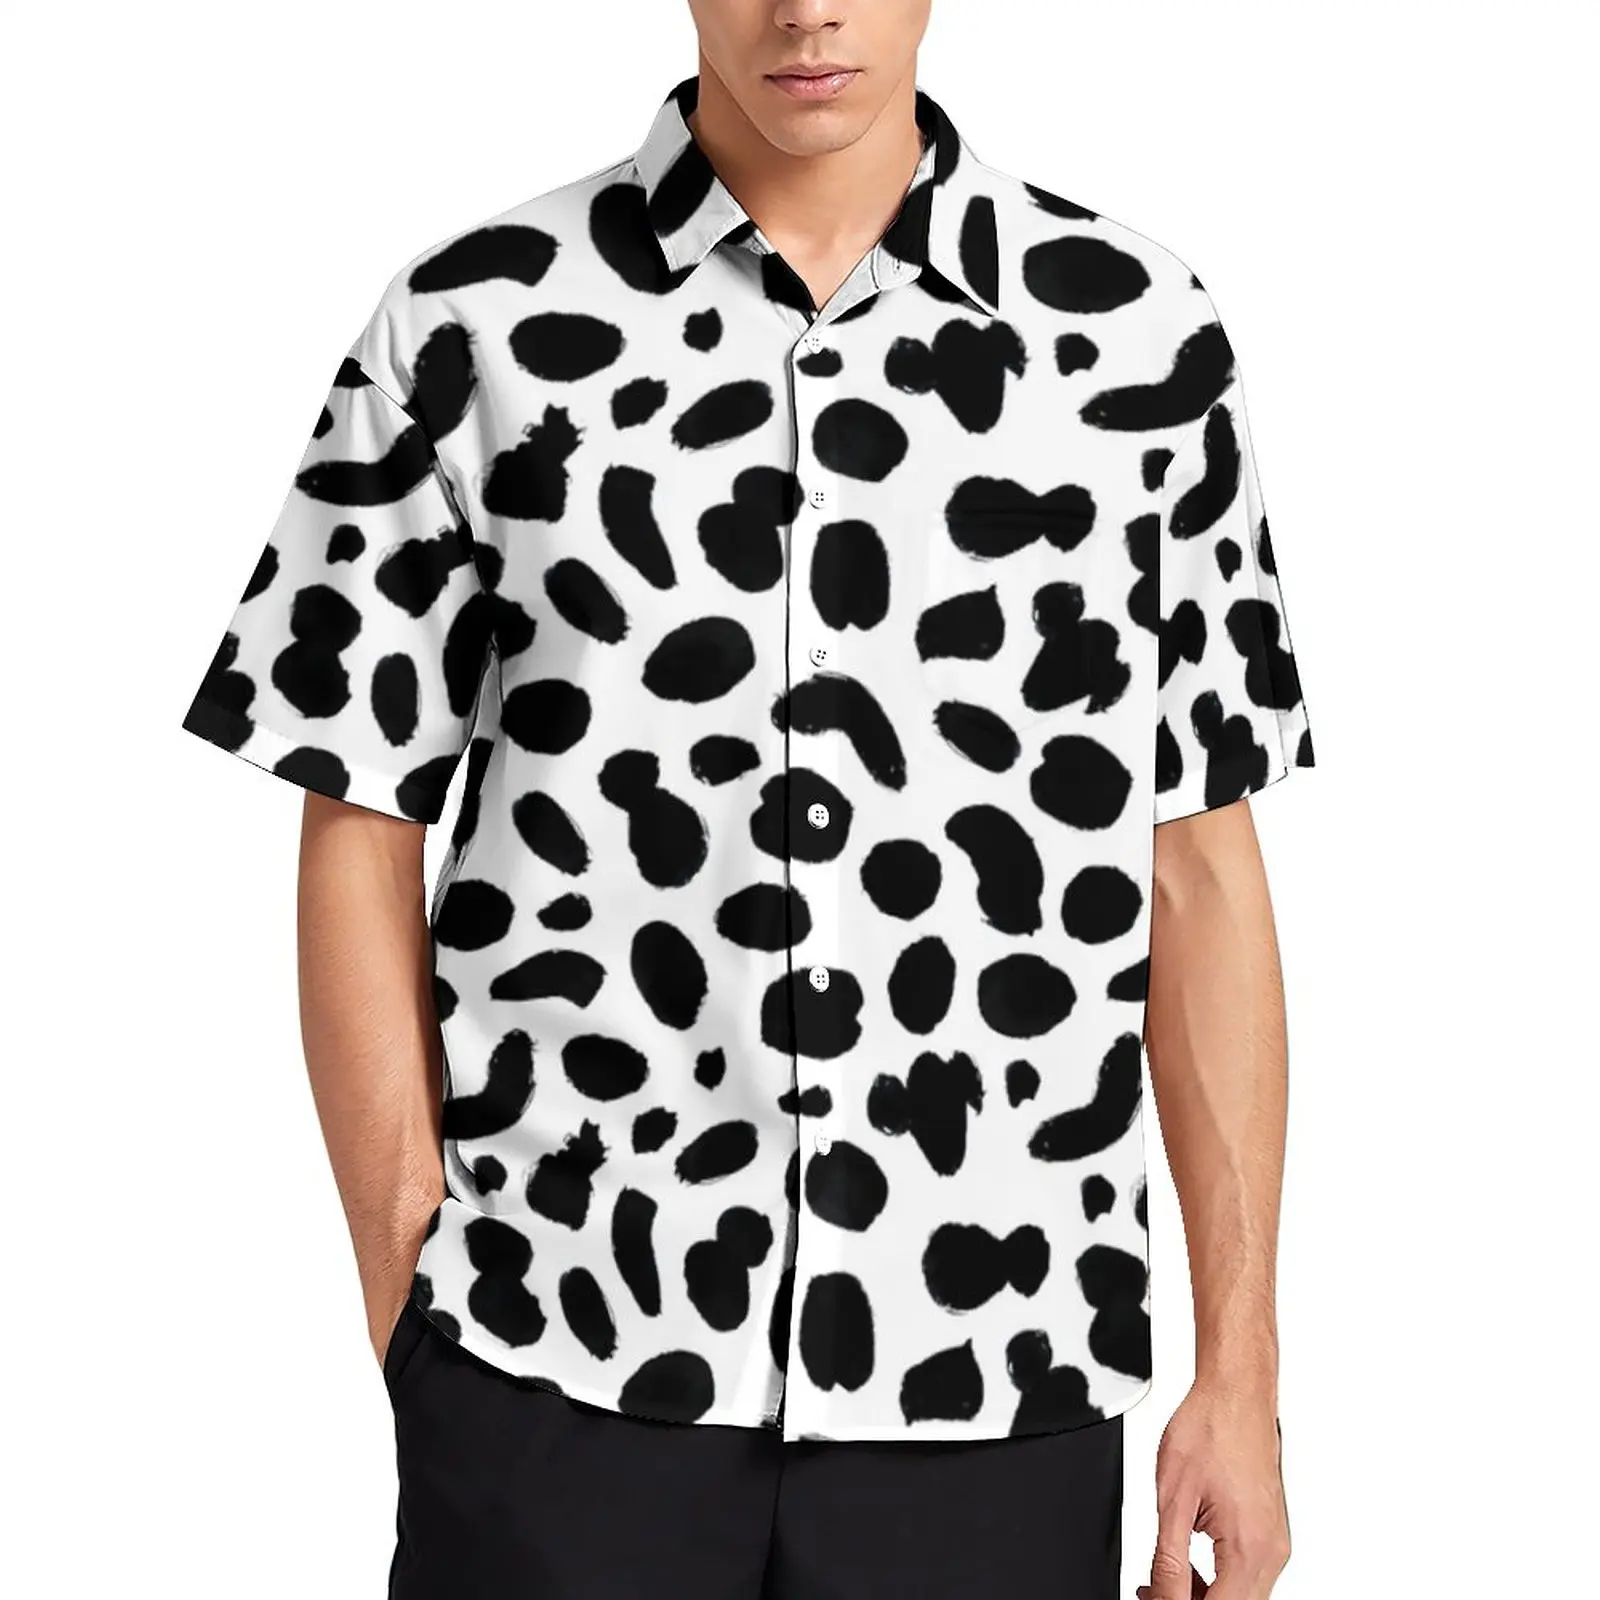 

Dalmatian Print Blouses Male Black White Spots Casual Shirts Hawaii Short Sleeve Design Stylish Oversized Vacation Shirt Gift